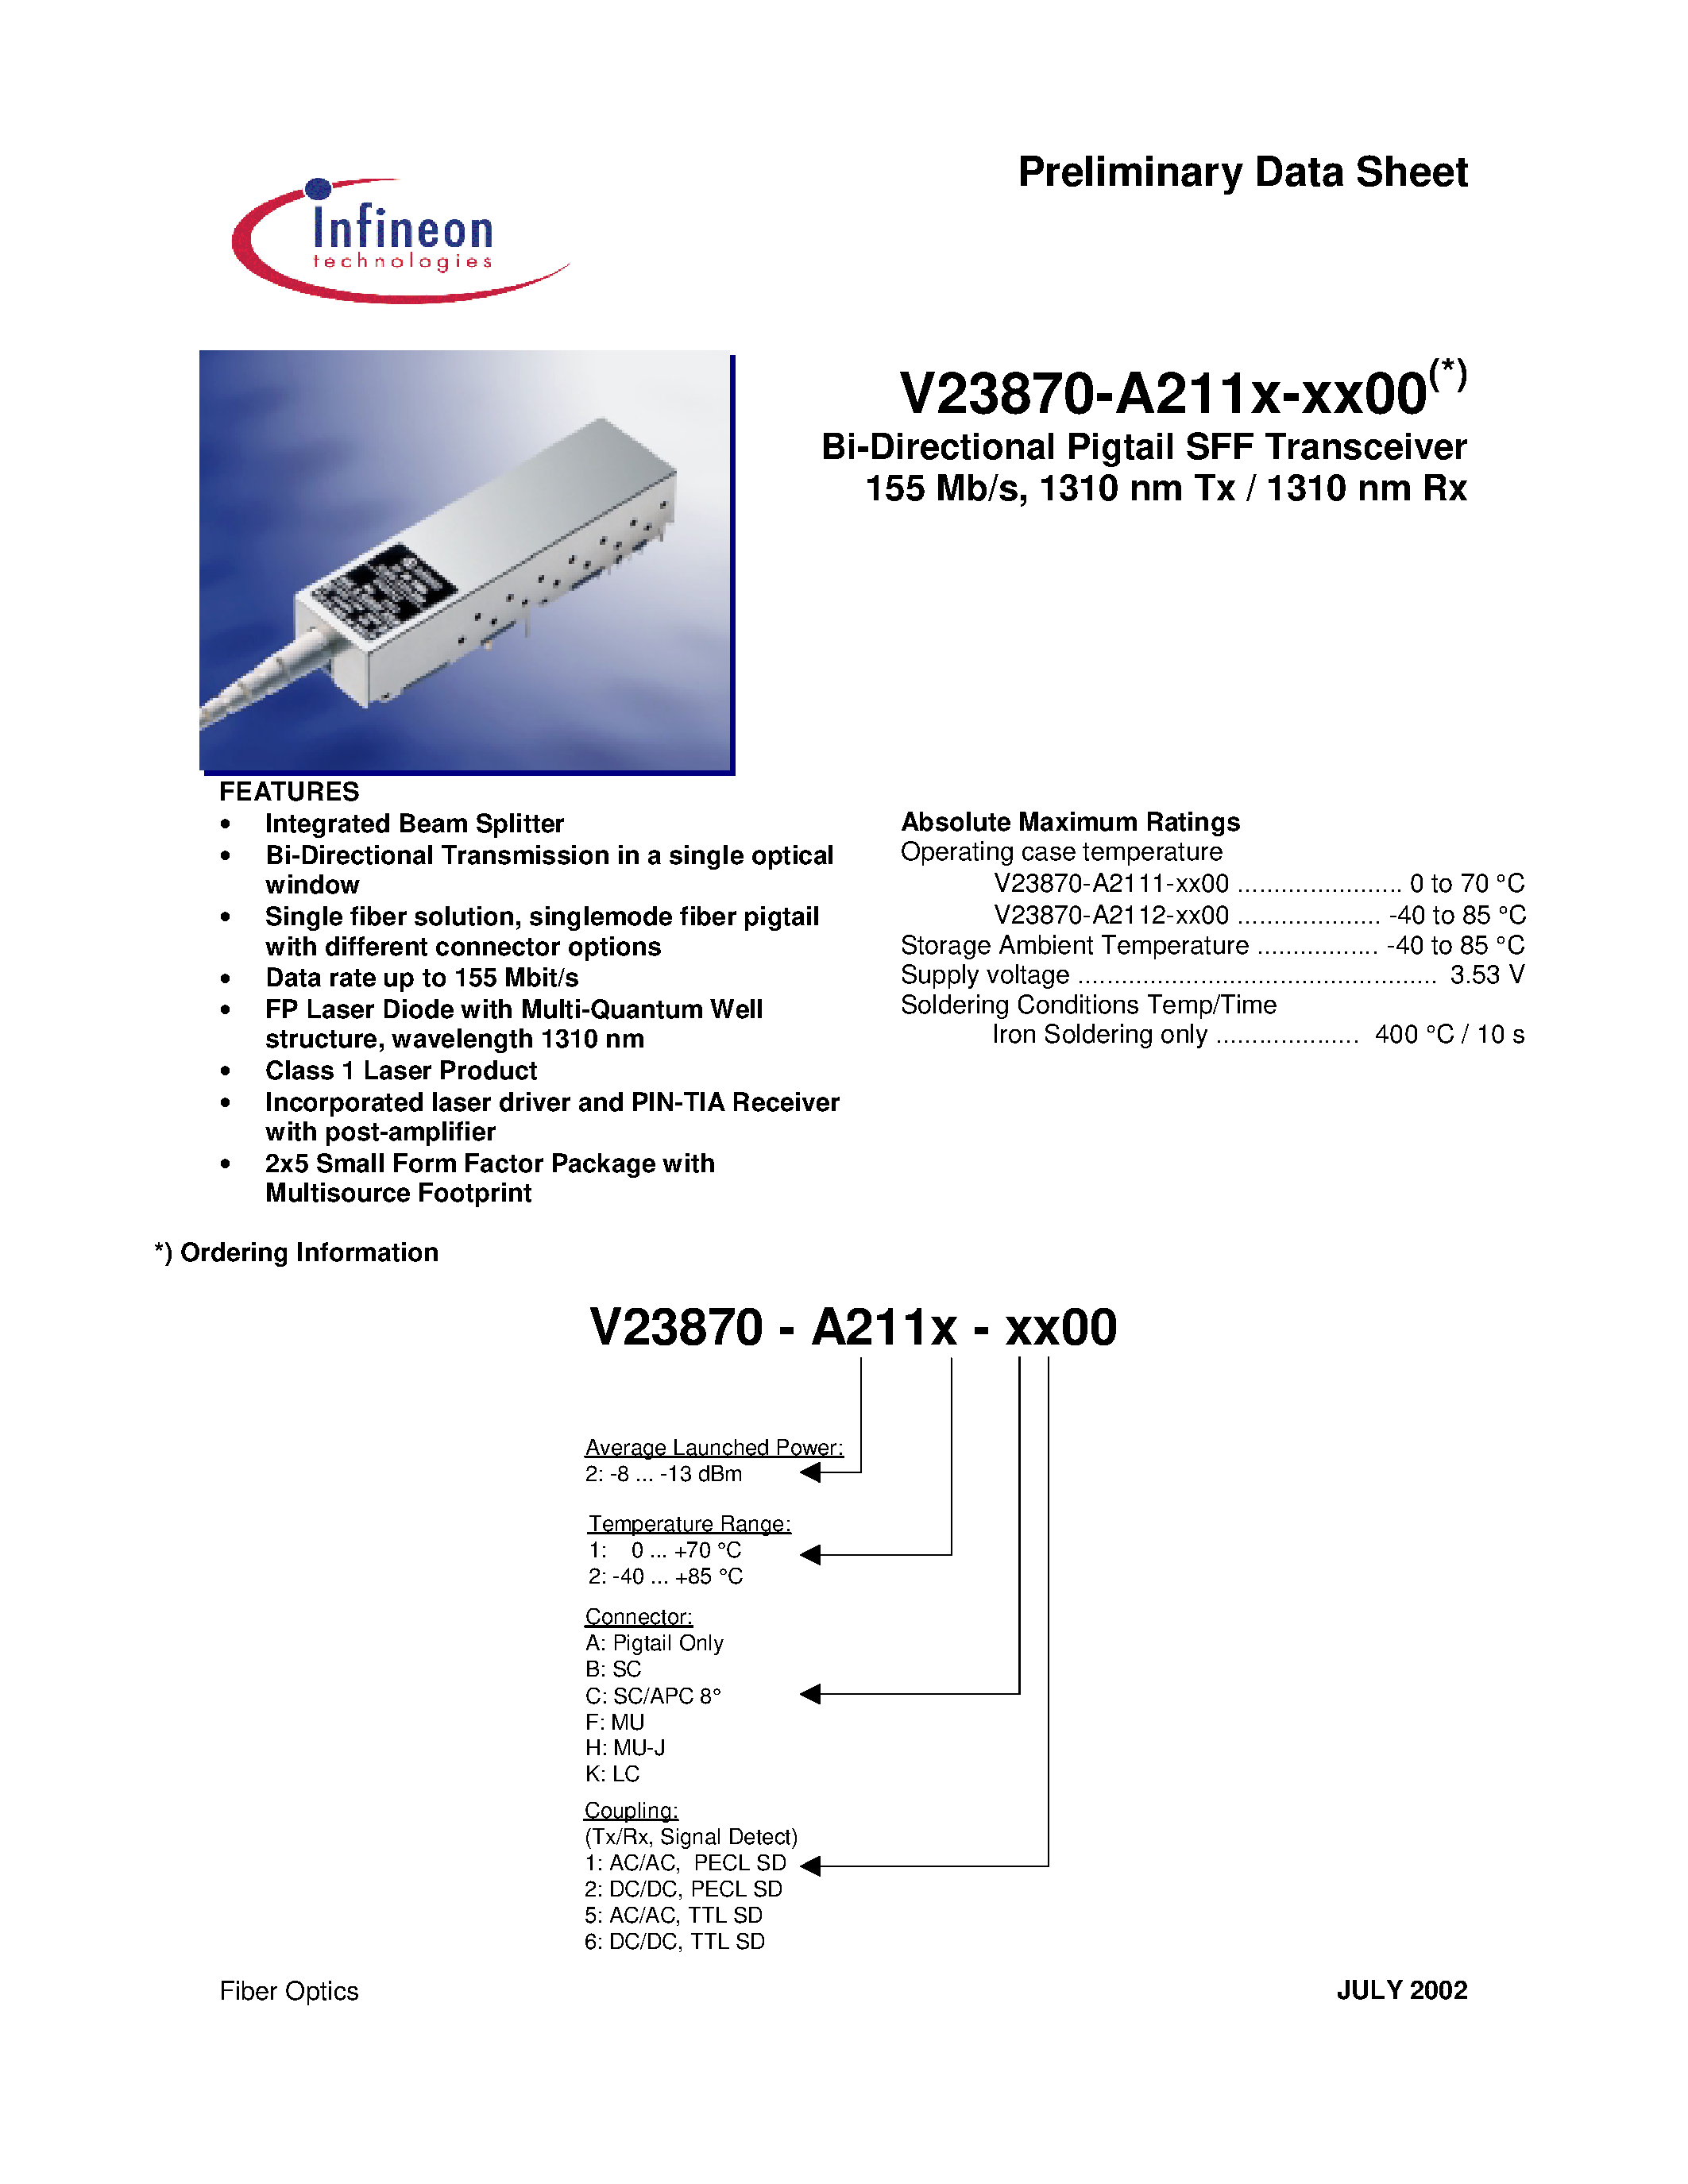 Даташит V23870-A2111-A500 - Bi-Directional Pigtail SFF Transceiver 155 Mb/s/ 1310 nm Tx / 1310 nm Rx страница 1